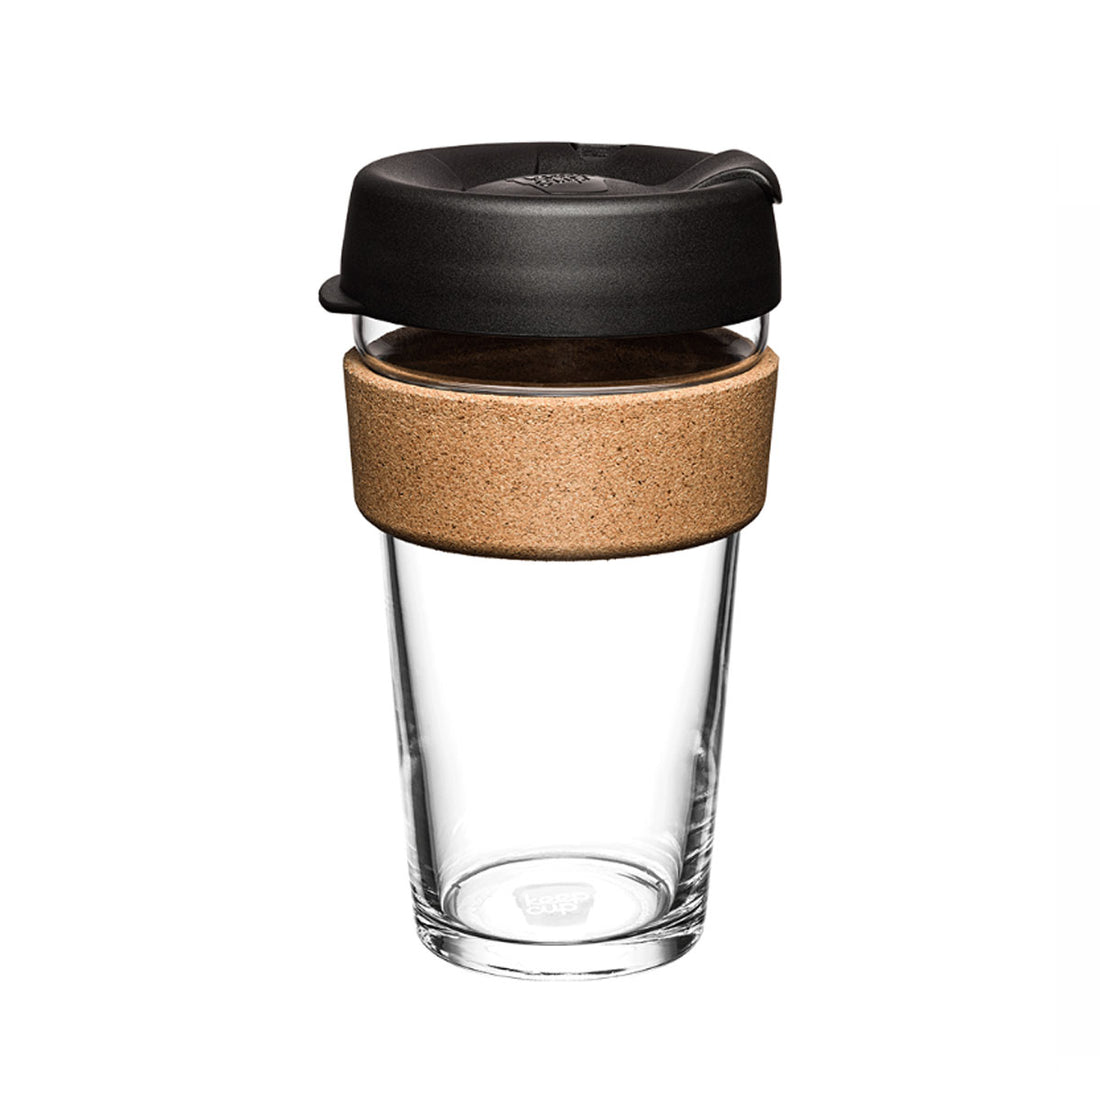 KeepCup Brew Cork Glass Reusable Coffee Cup L 16oz/454ml - Black